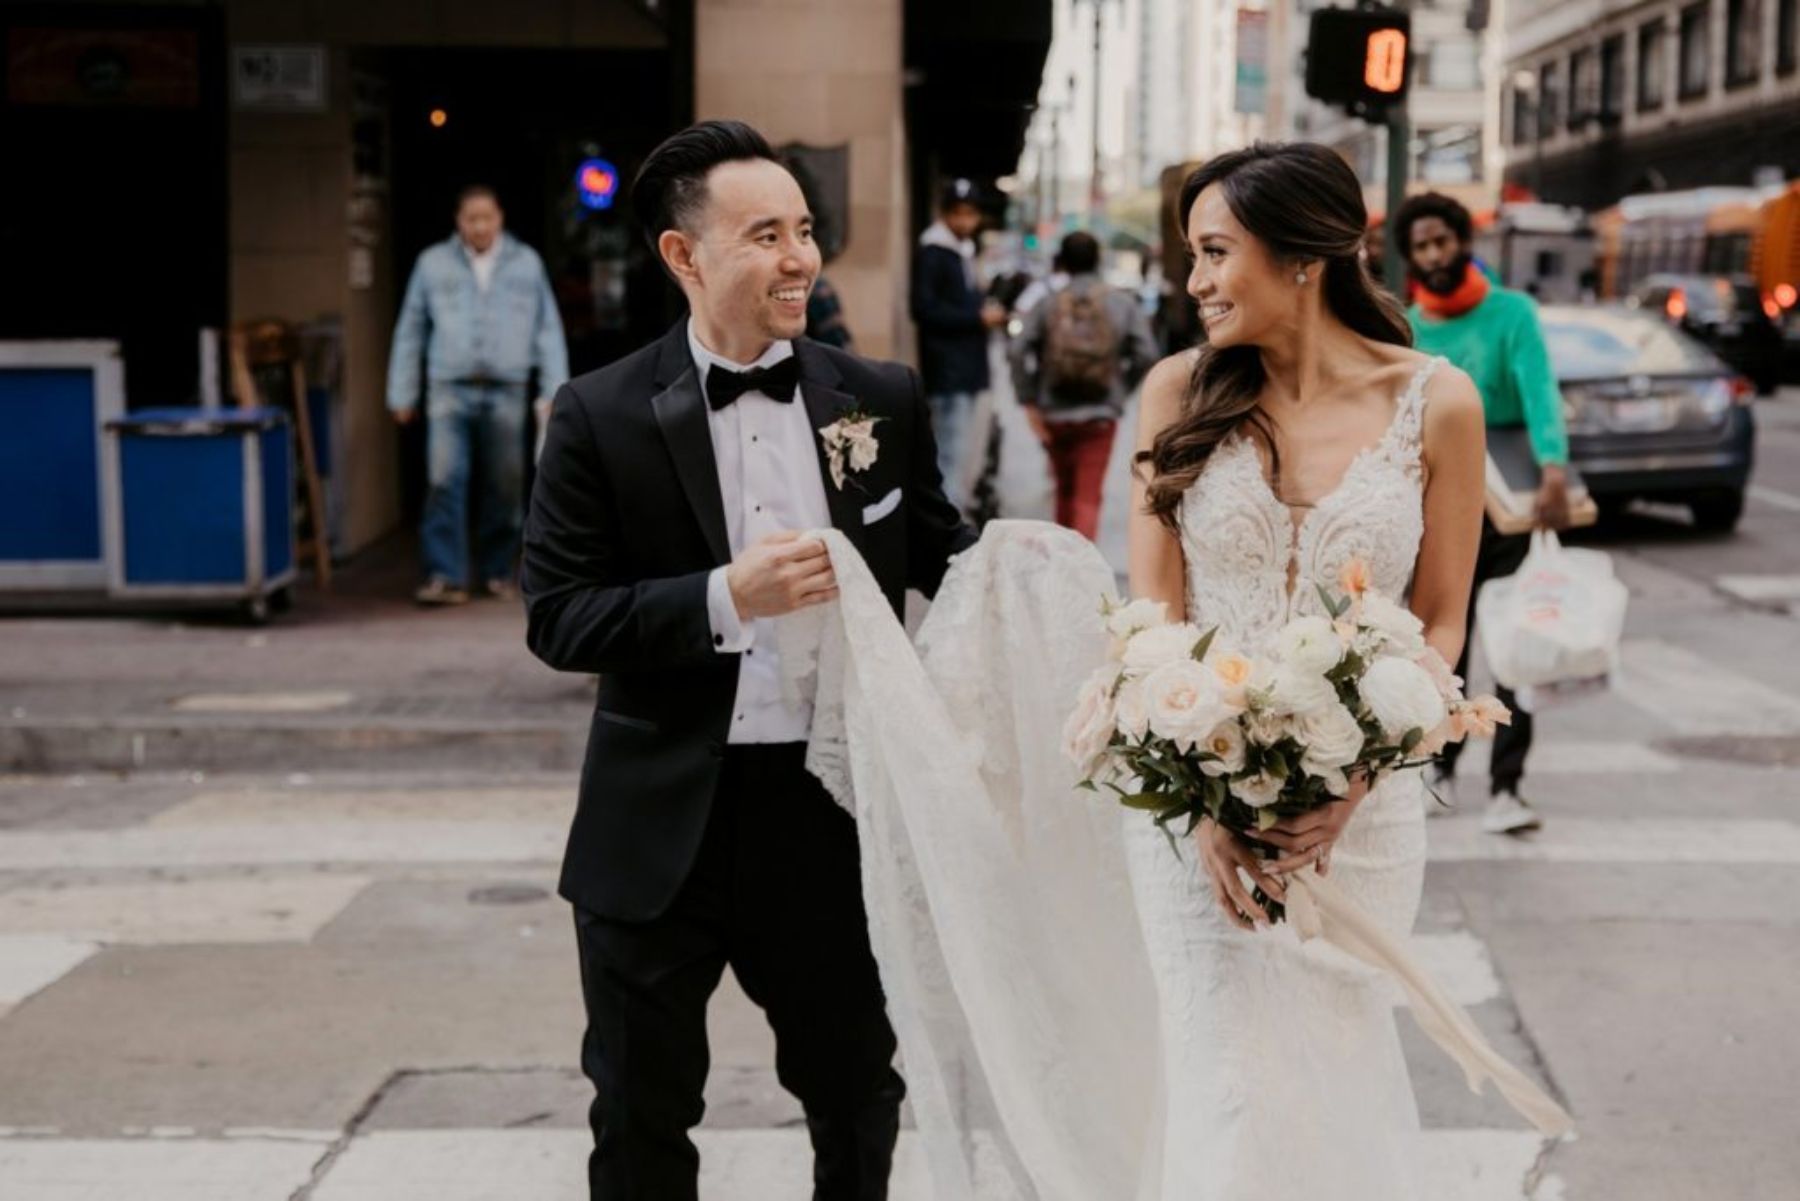 Groom holding bride's wedding dress train as they cross street